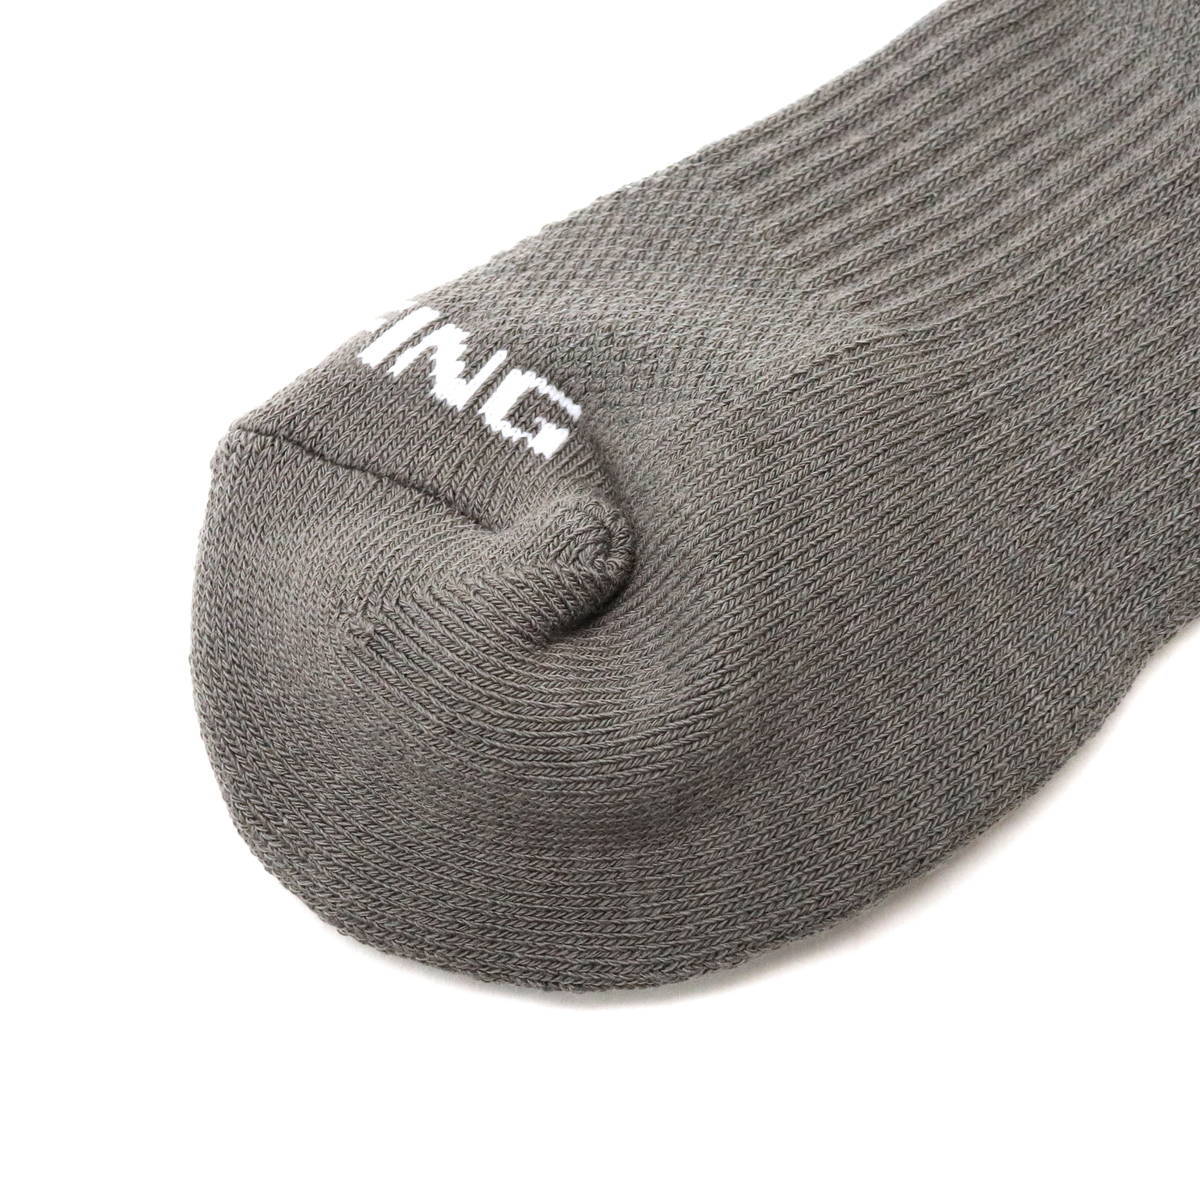 [ mail service free shipping ] Japan regular goods Briefing Golf socks BRIEFING GOLF socks MENS CORDURA MIDDLE SOCKS shoes under men's made in Japan BRG213M03